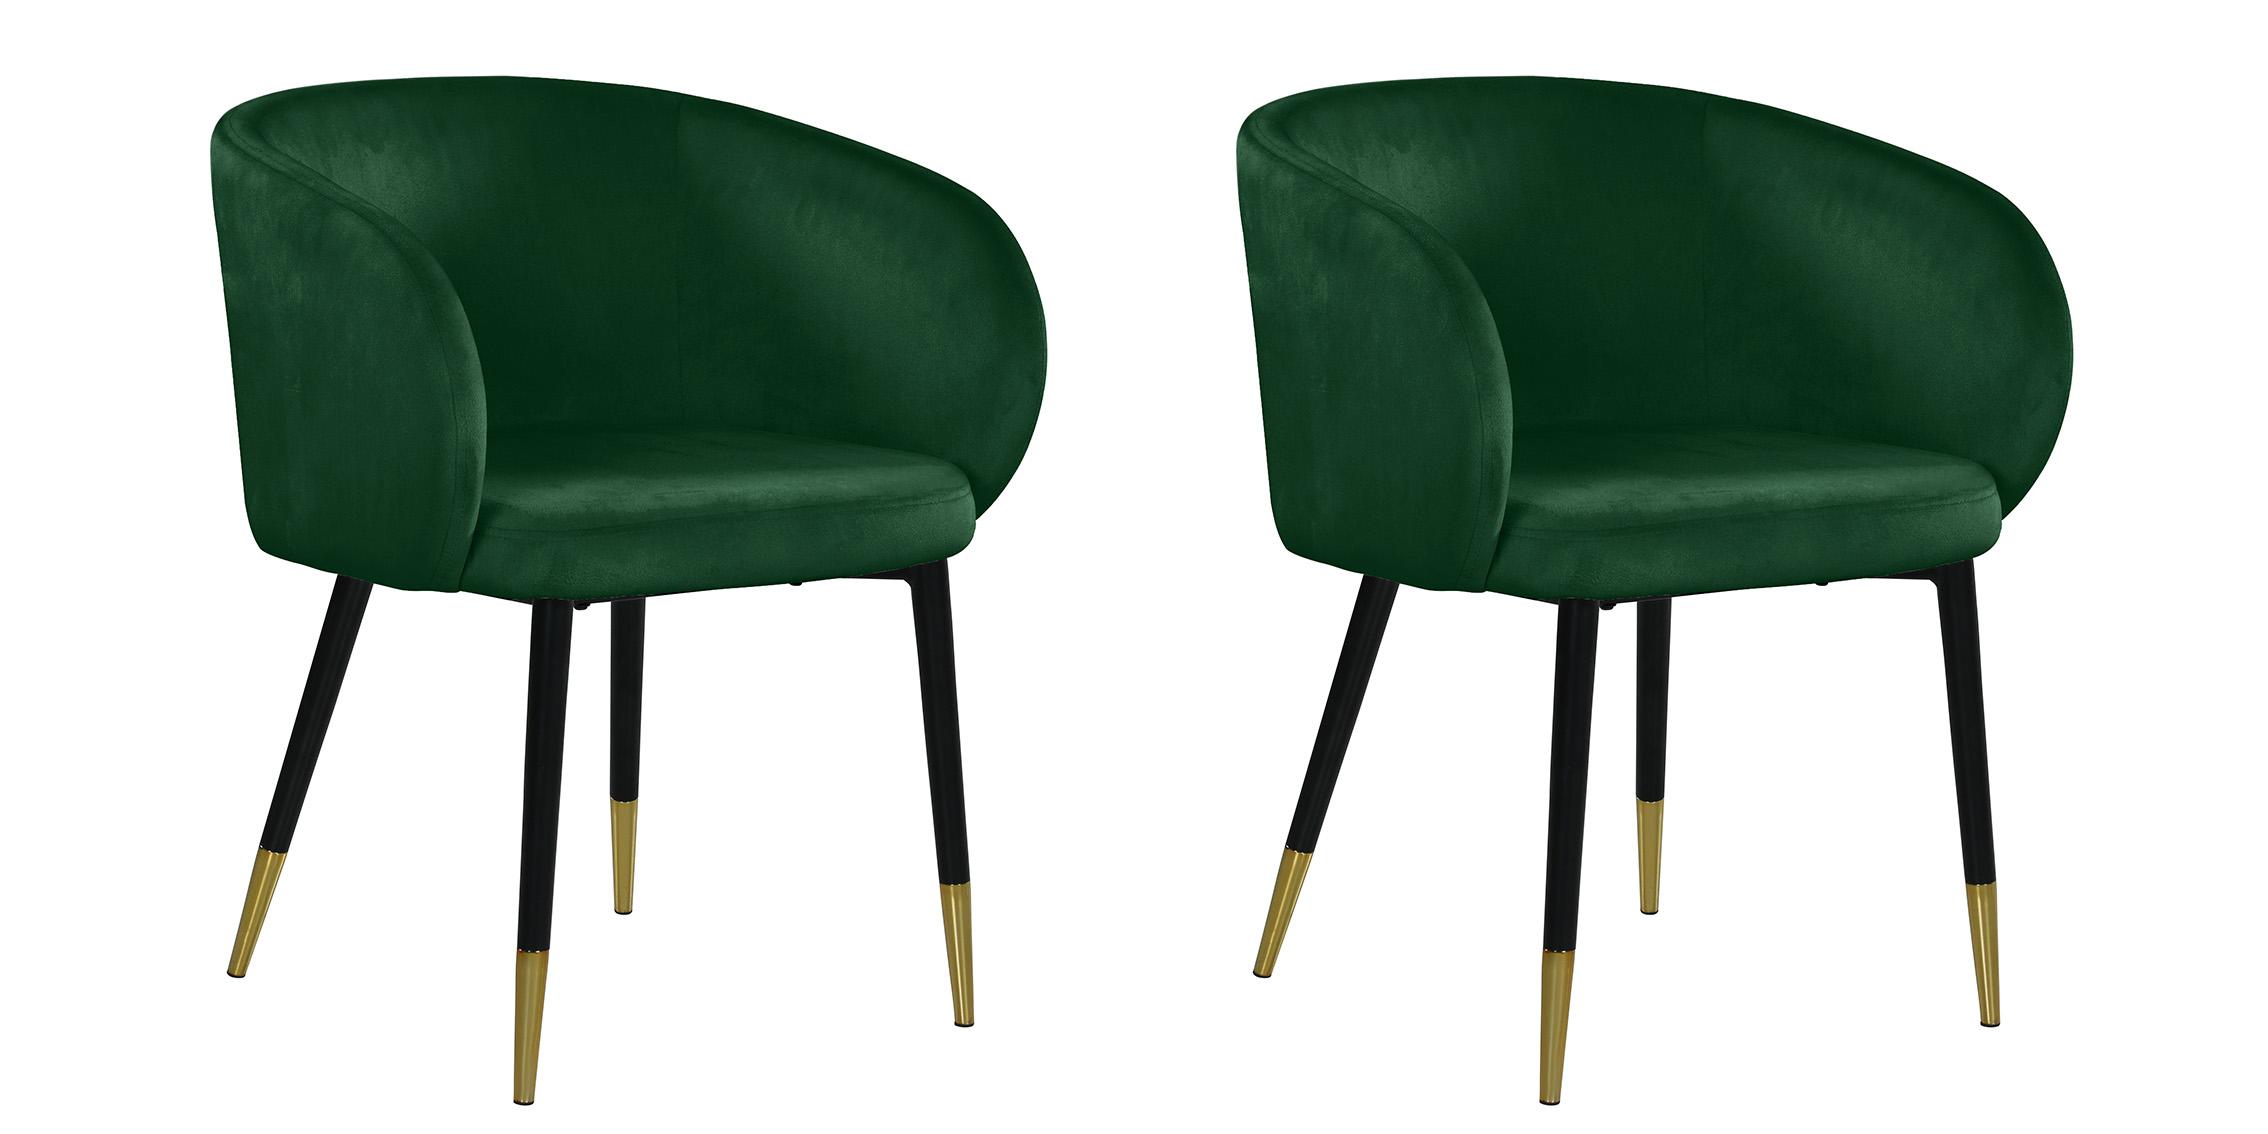 Contemporary, Modern Dining Chair Set LOUISE 733Green 733Green-C-Set-2 in Chrome, Green Velvet